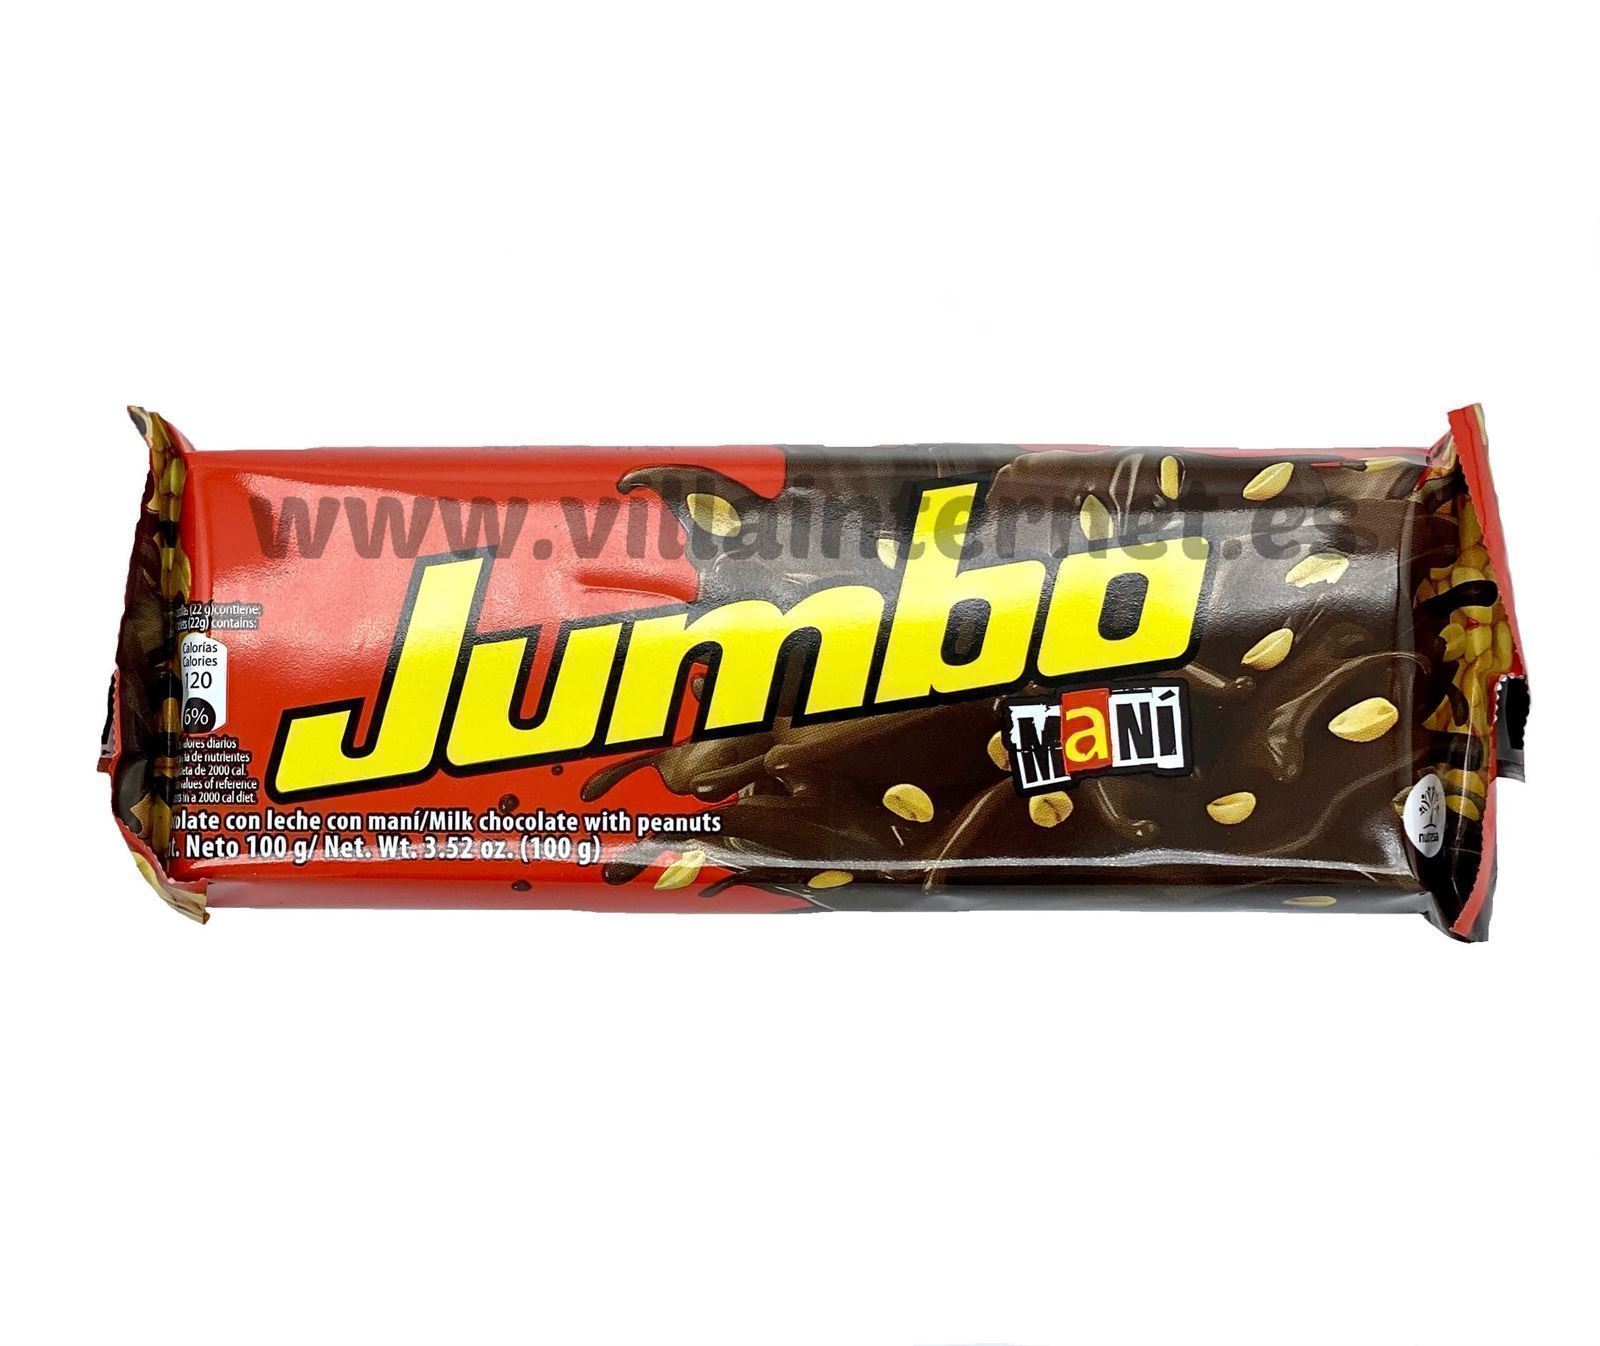 Chocolate Jumbo maní 100g - Imagen 1